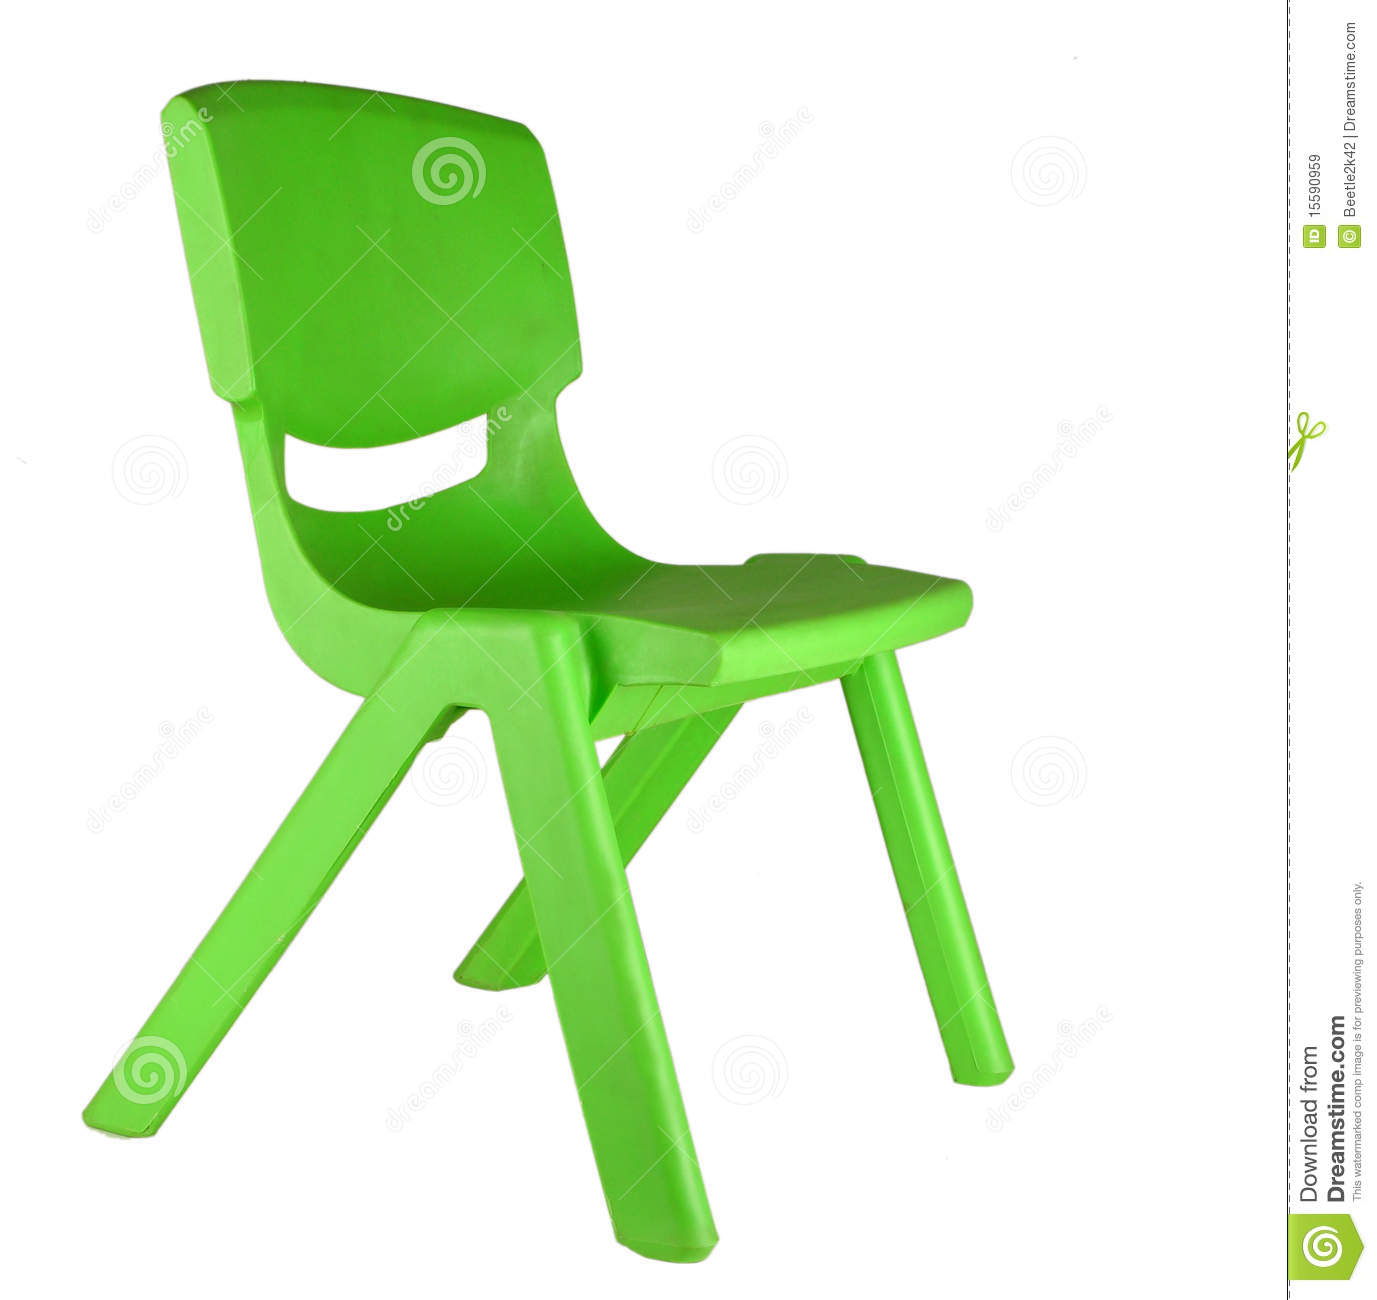 Kid chair stock.